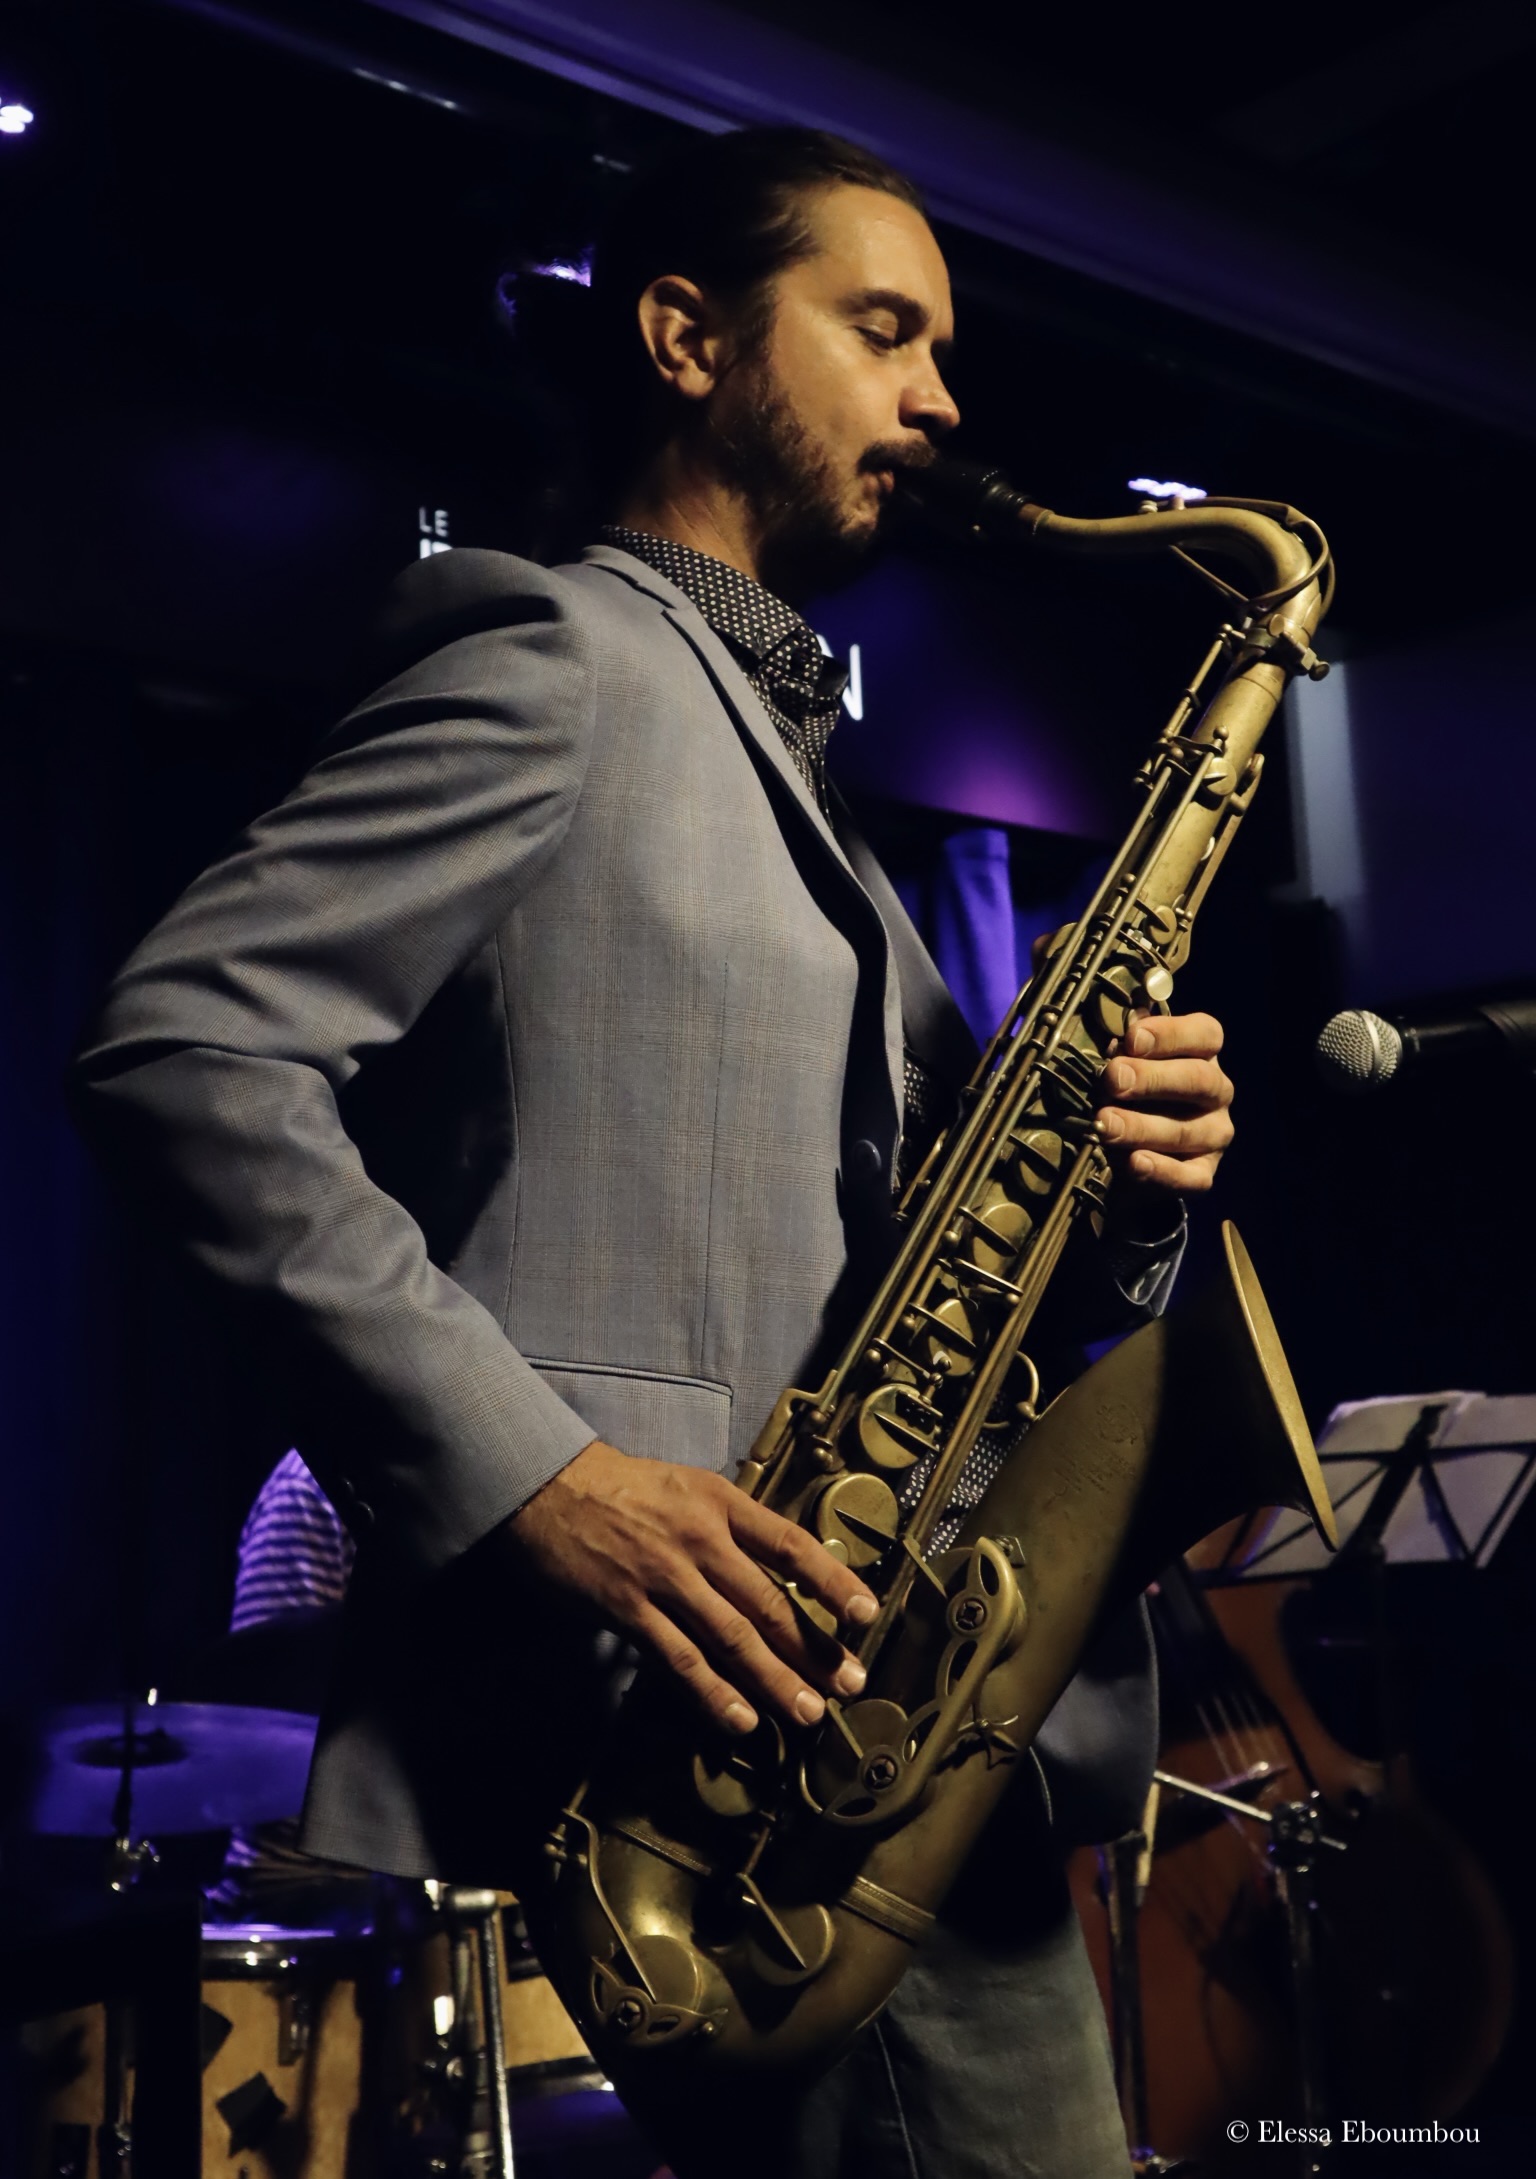 Robby Marshall au saxophone au Barbizon